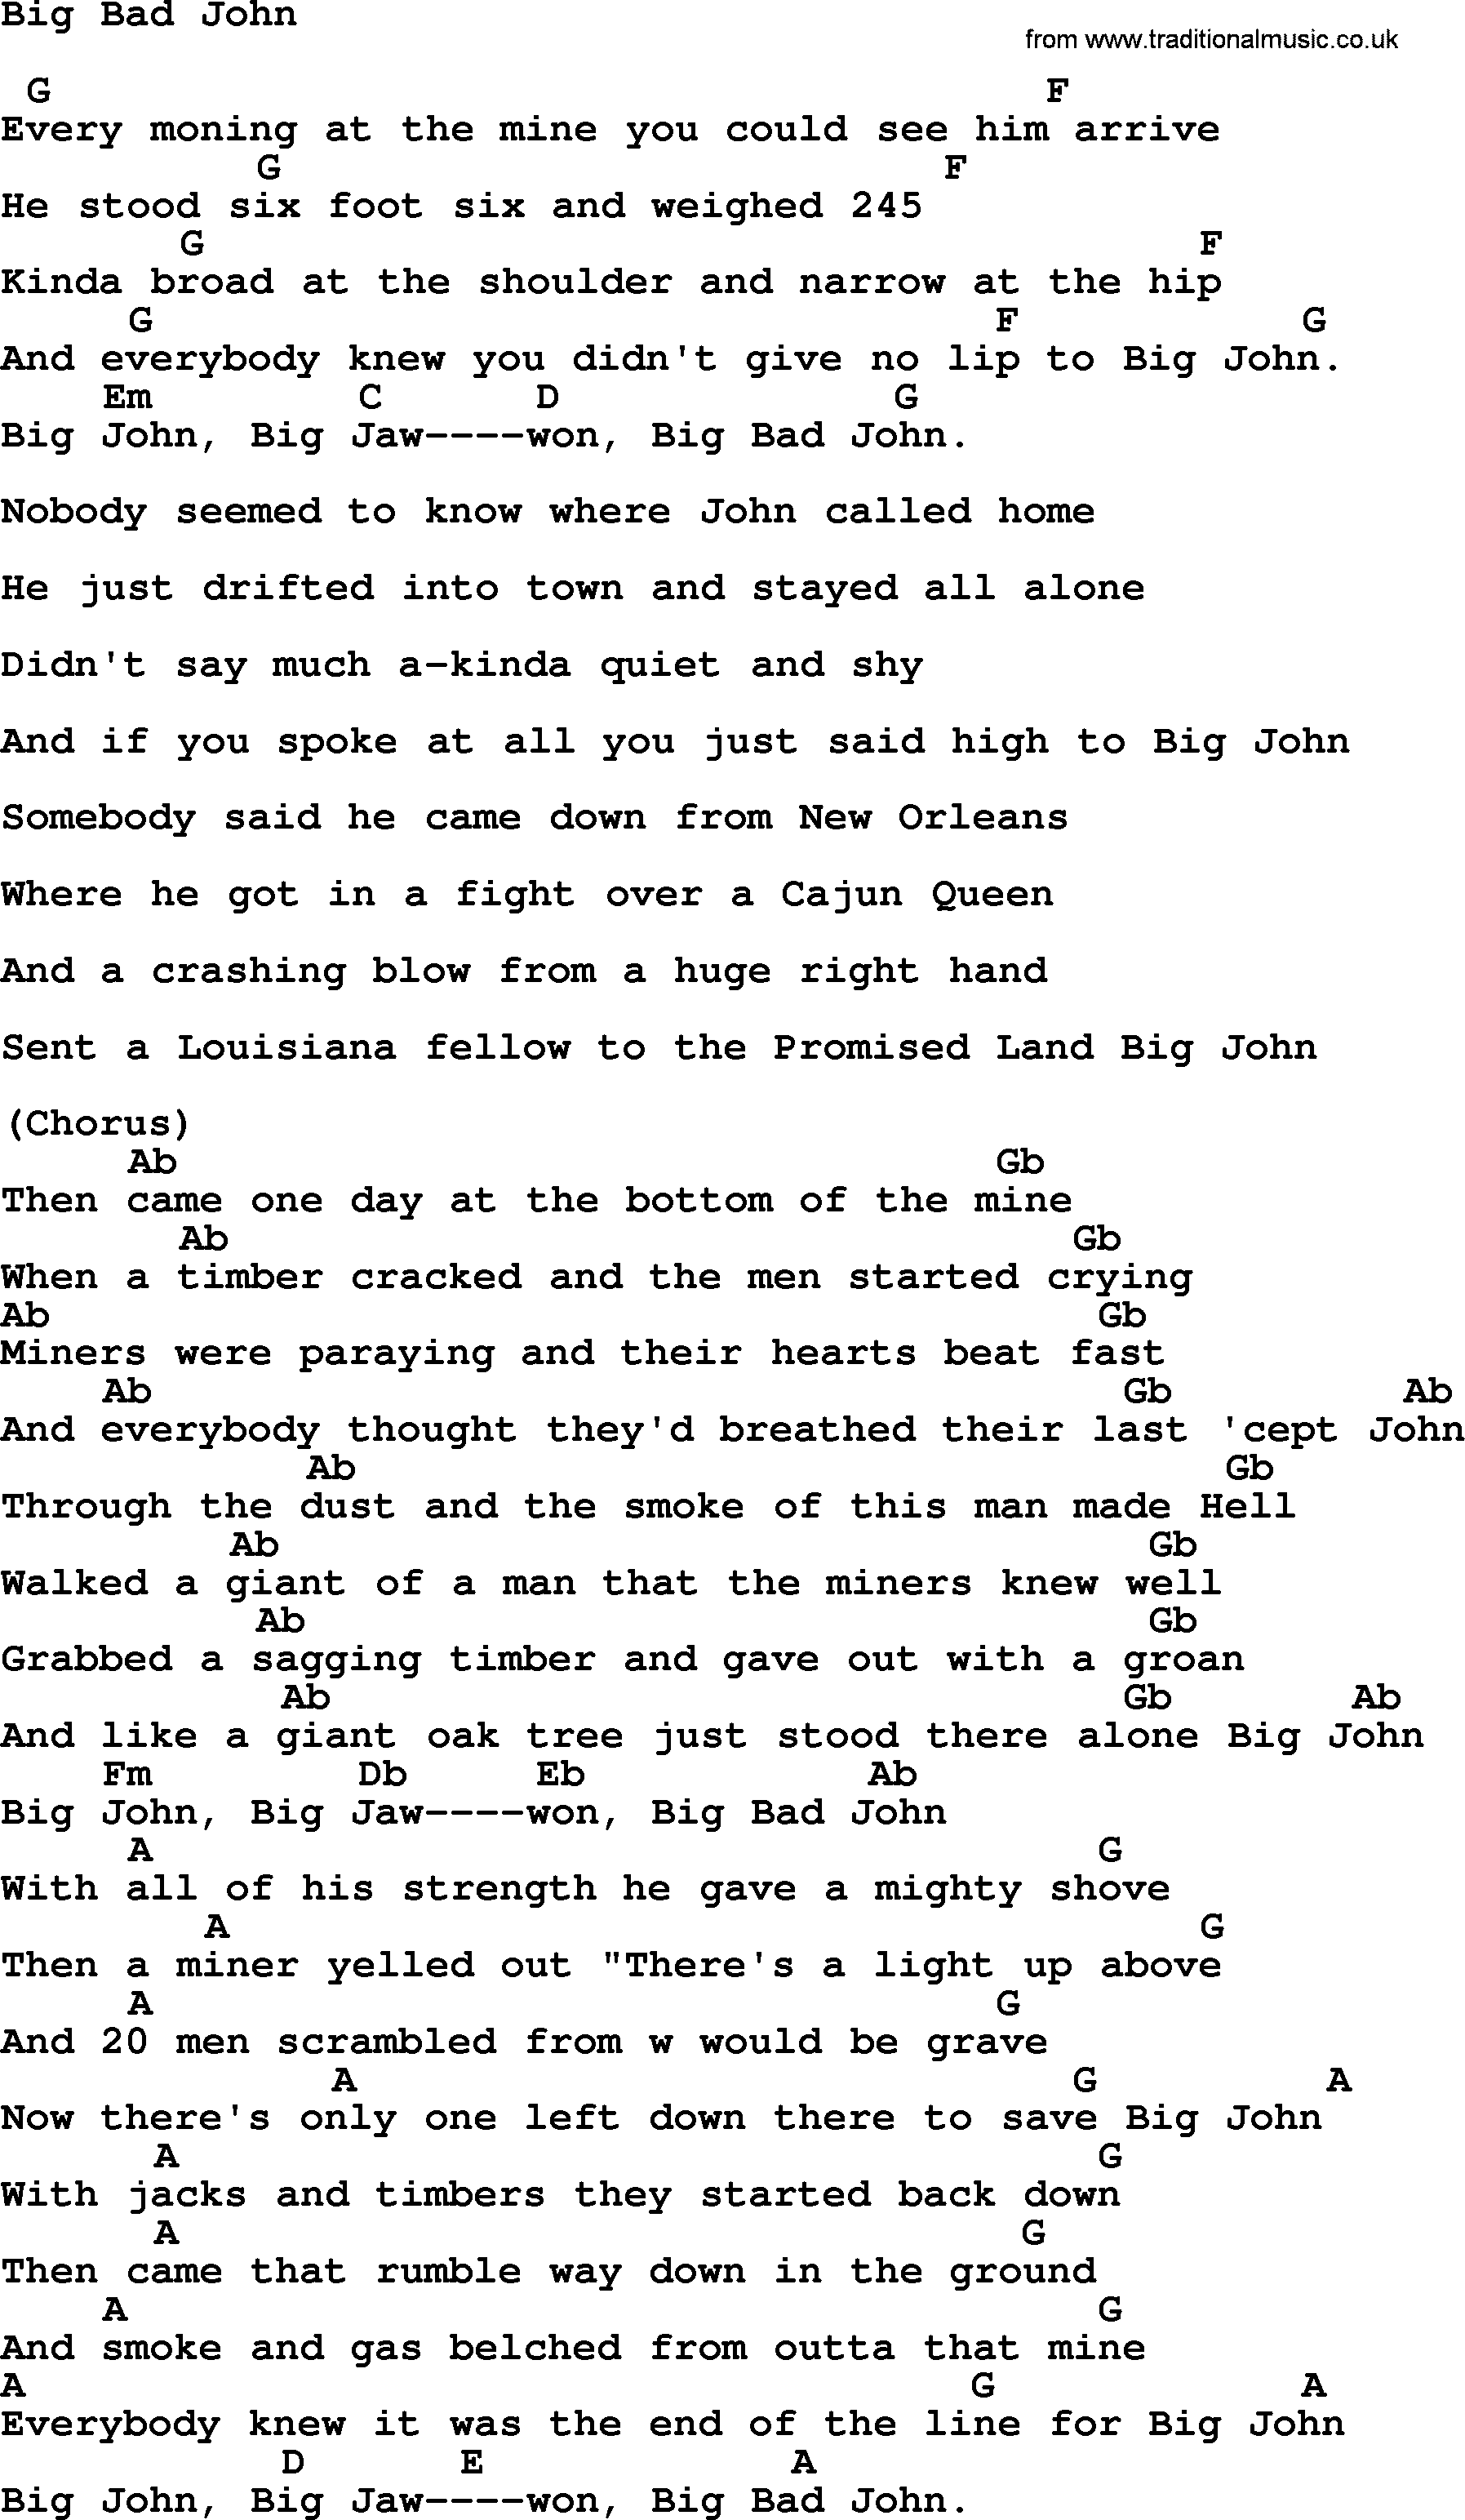 Johnny Cash song Big Bad John, lyrics and chords